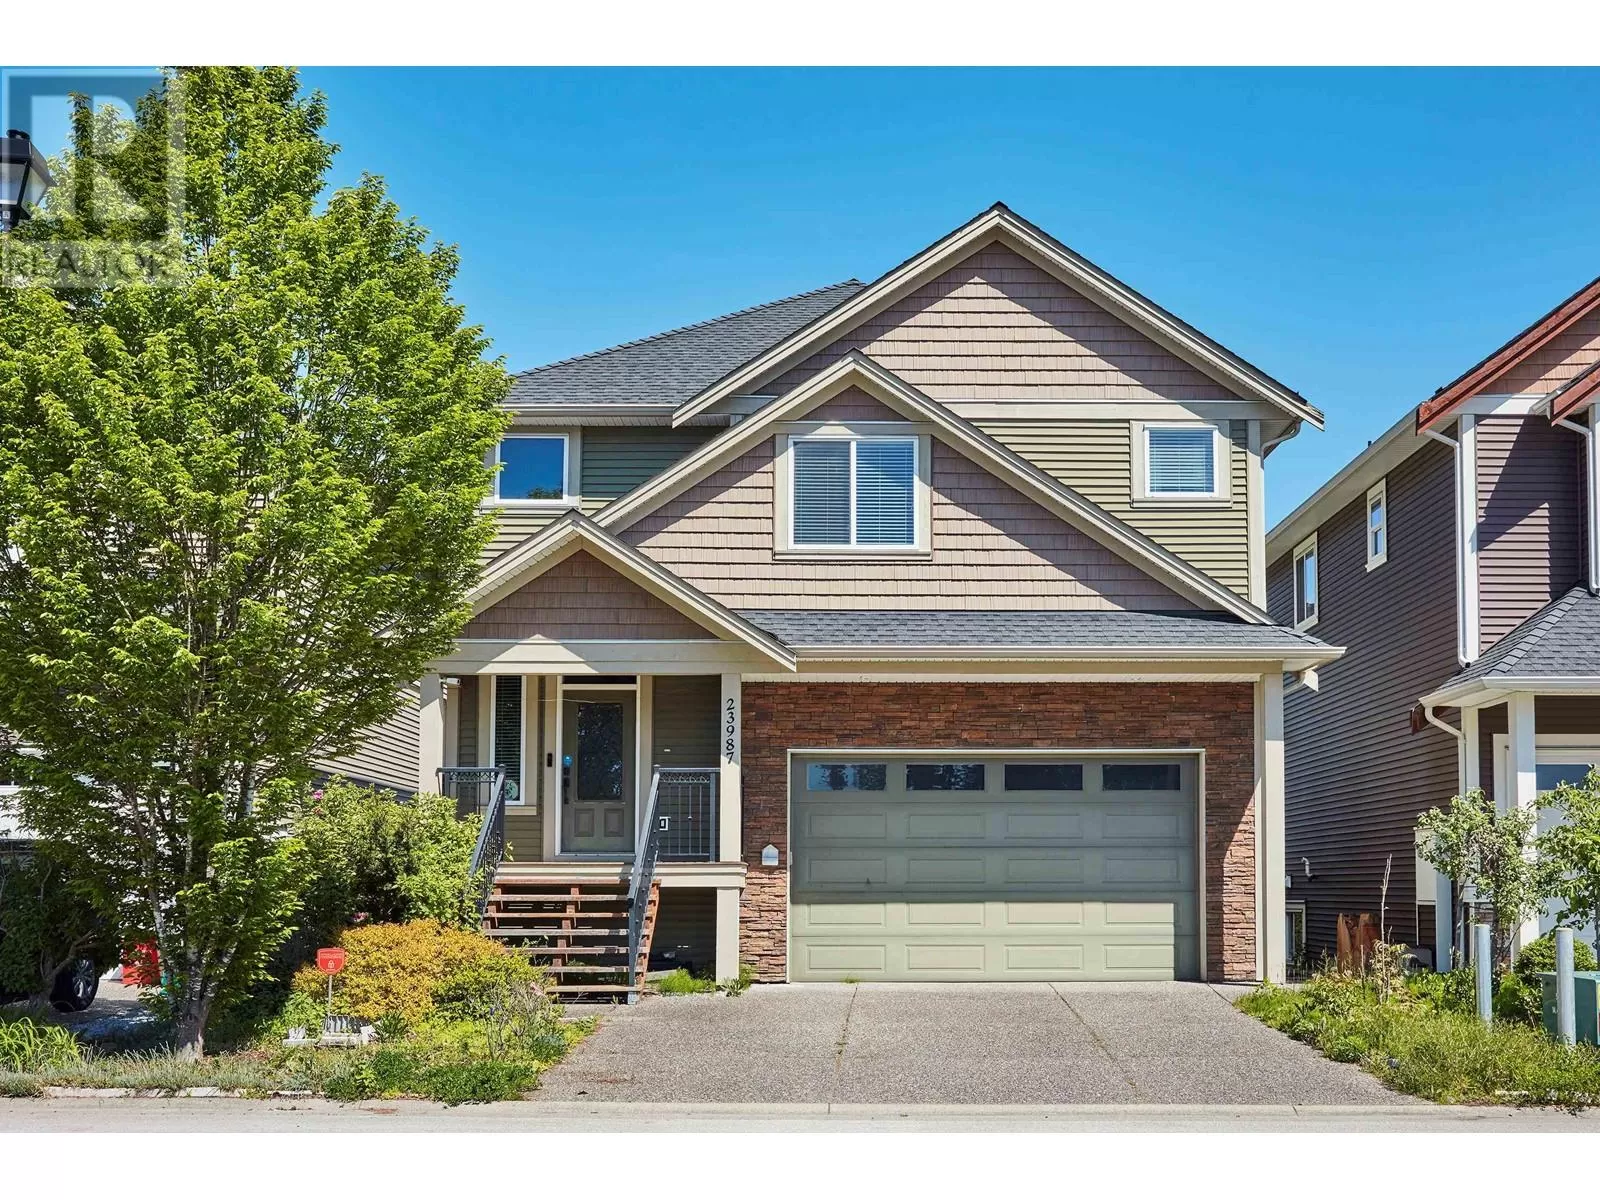 House for rent: 23987 120b Avenue, Maple Ridge, British Columbia V4R 2T7